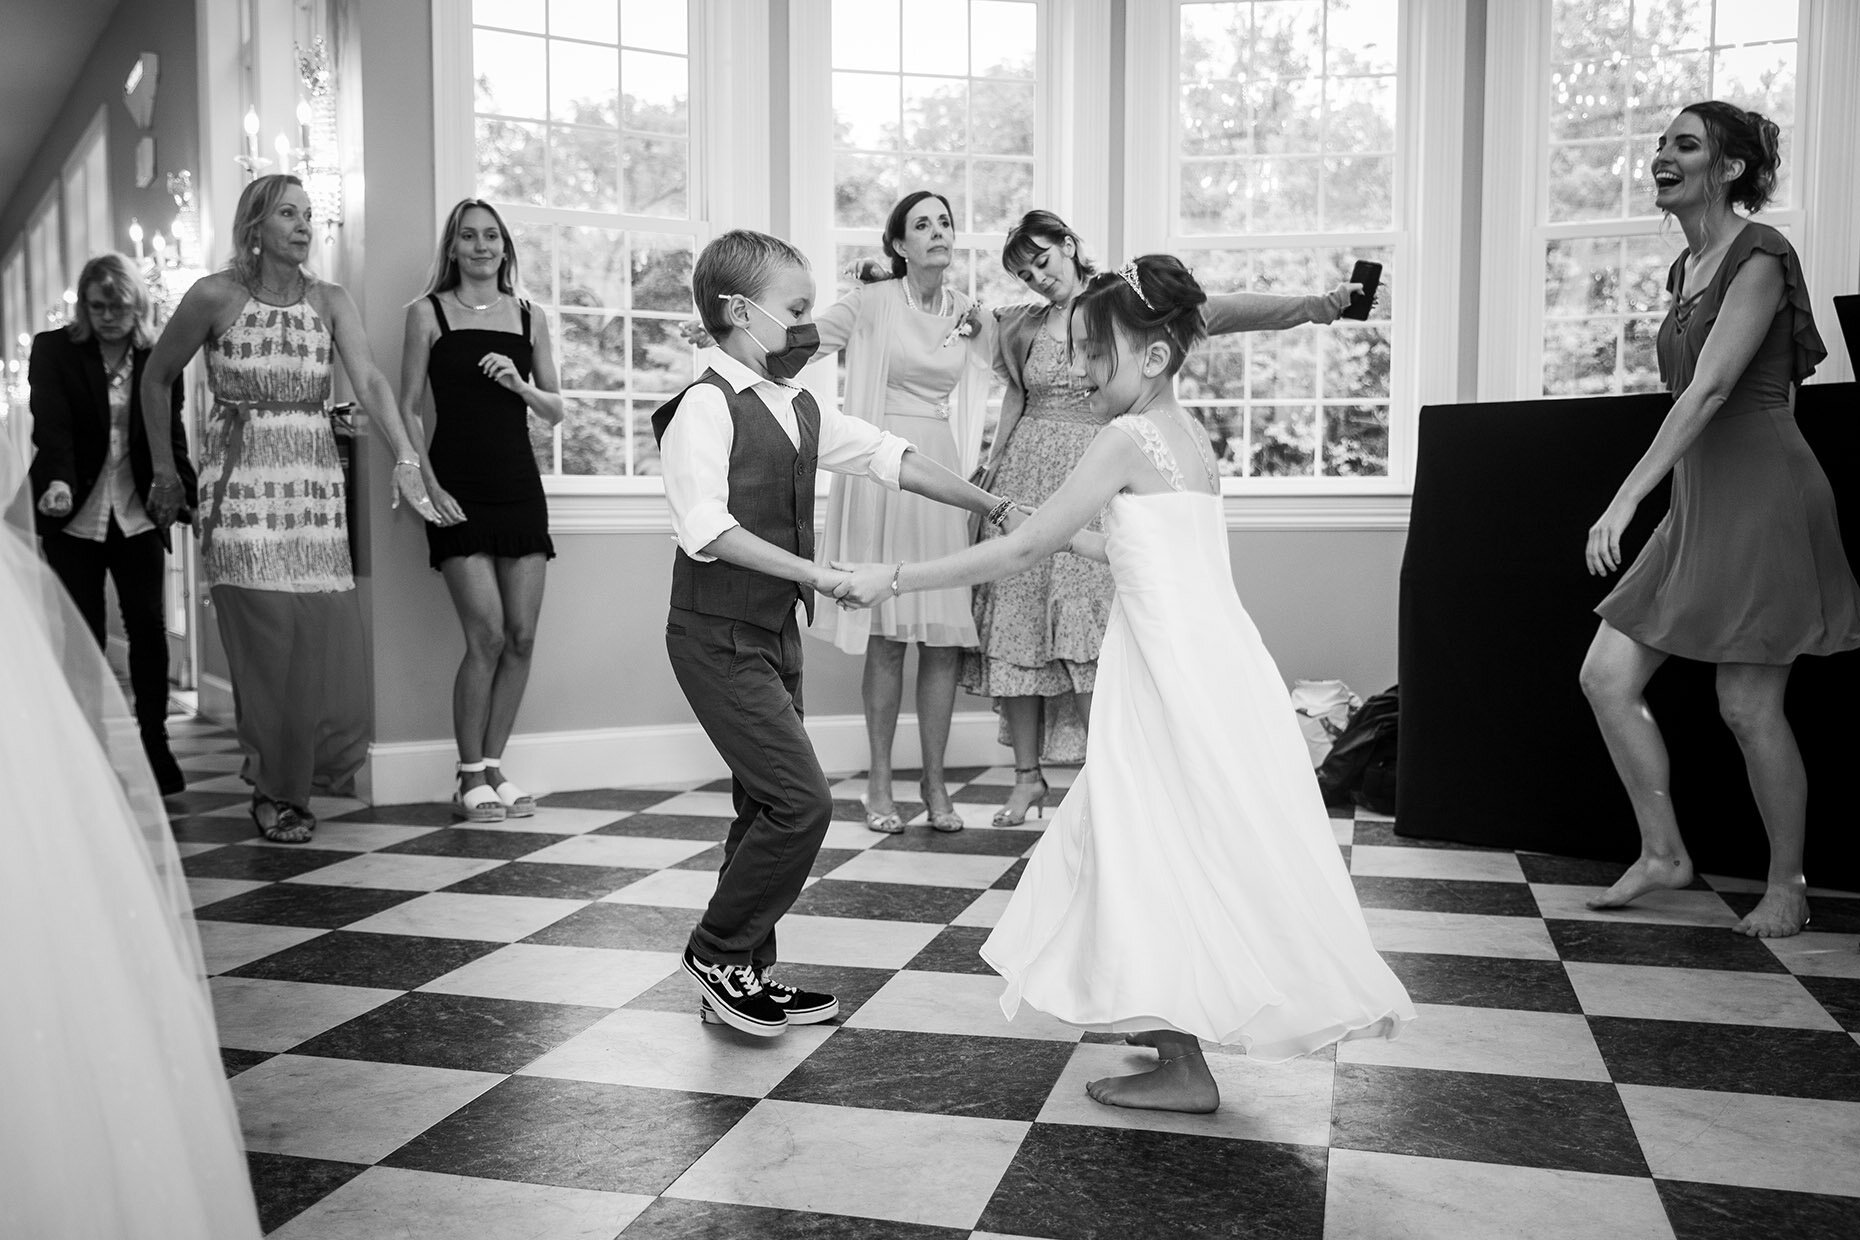 Daughter dancing at reception